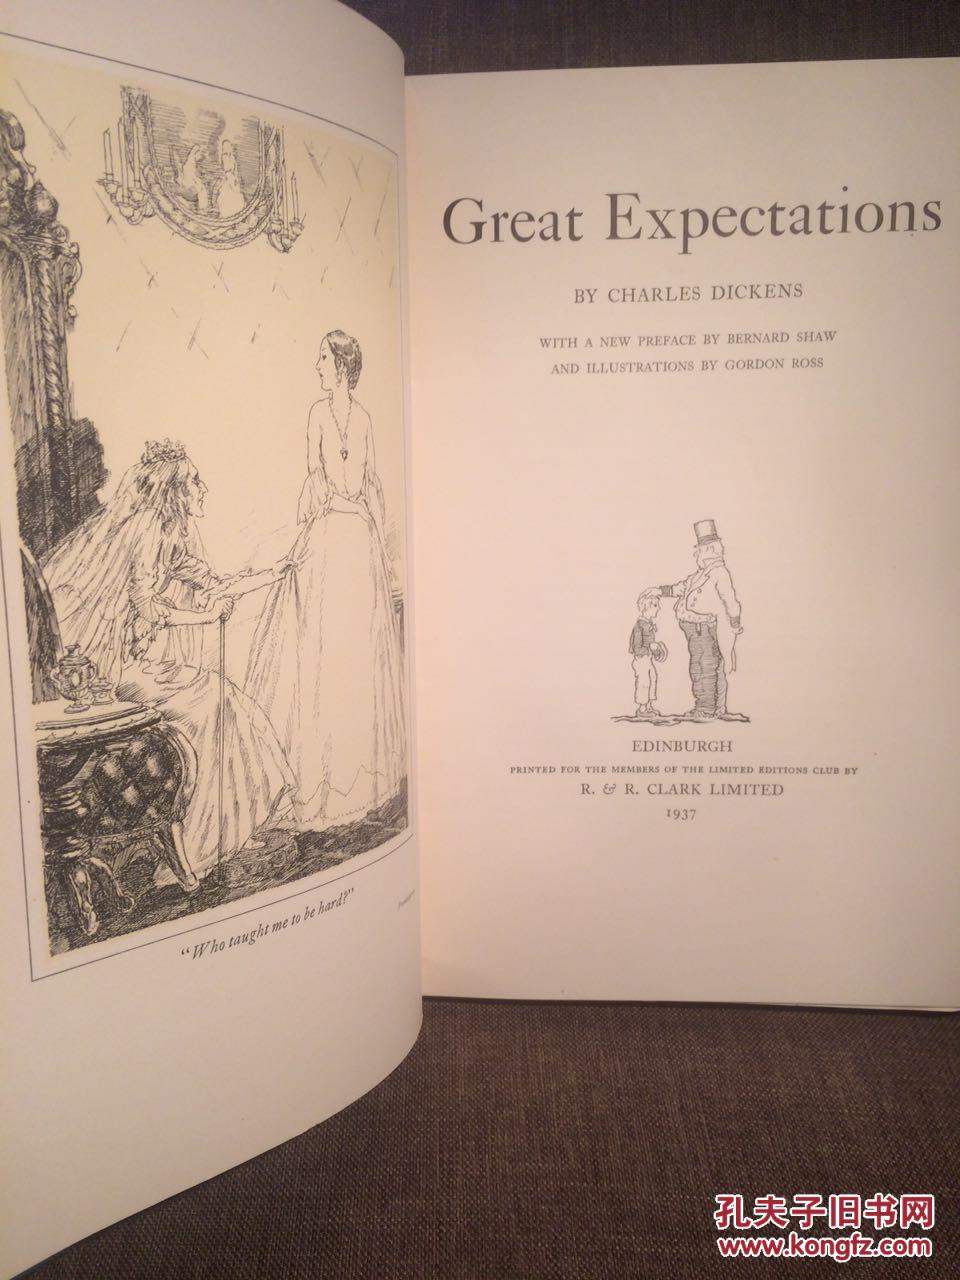 great expectations(狄更斯《远大前程》,名家gordon ross插图并亲笔